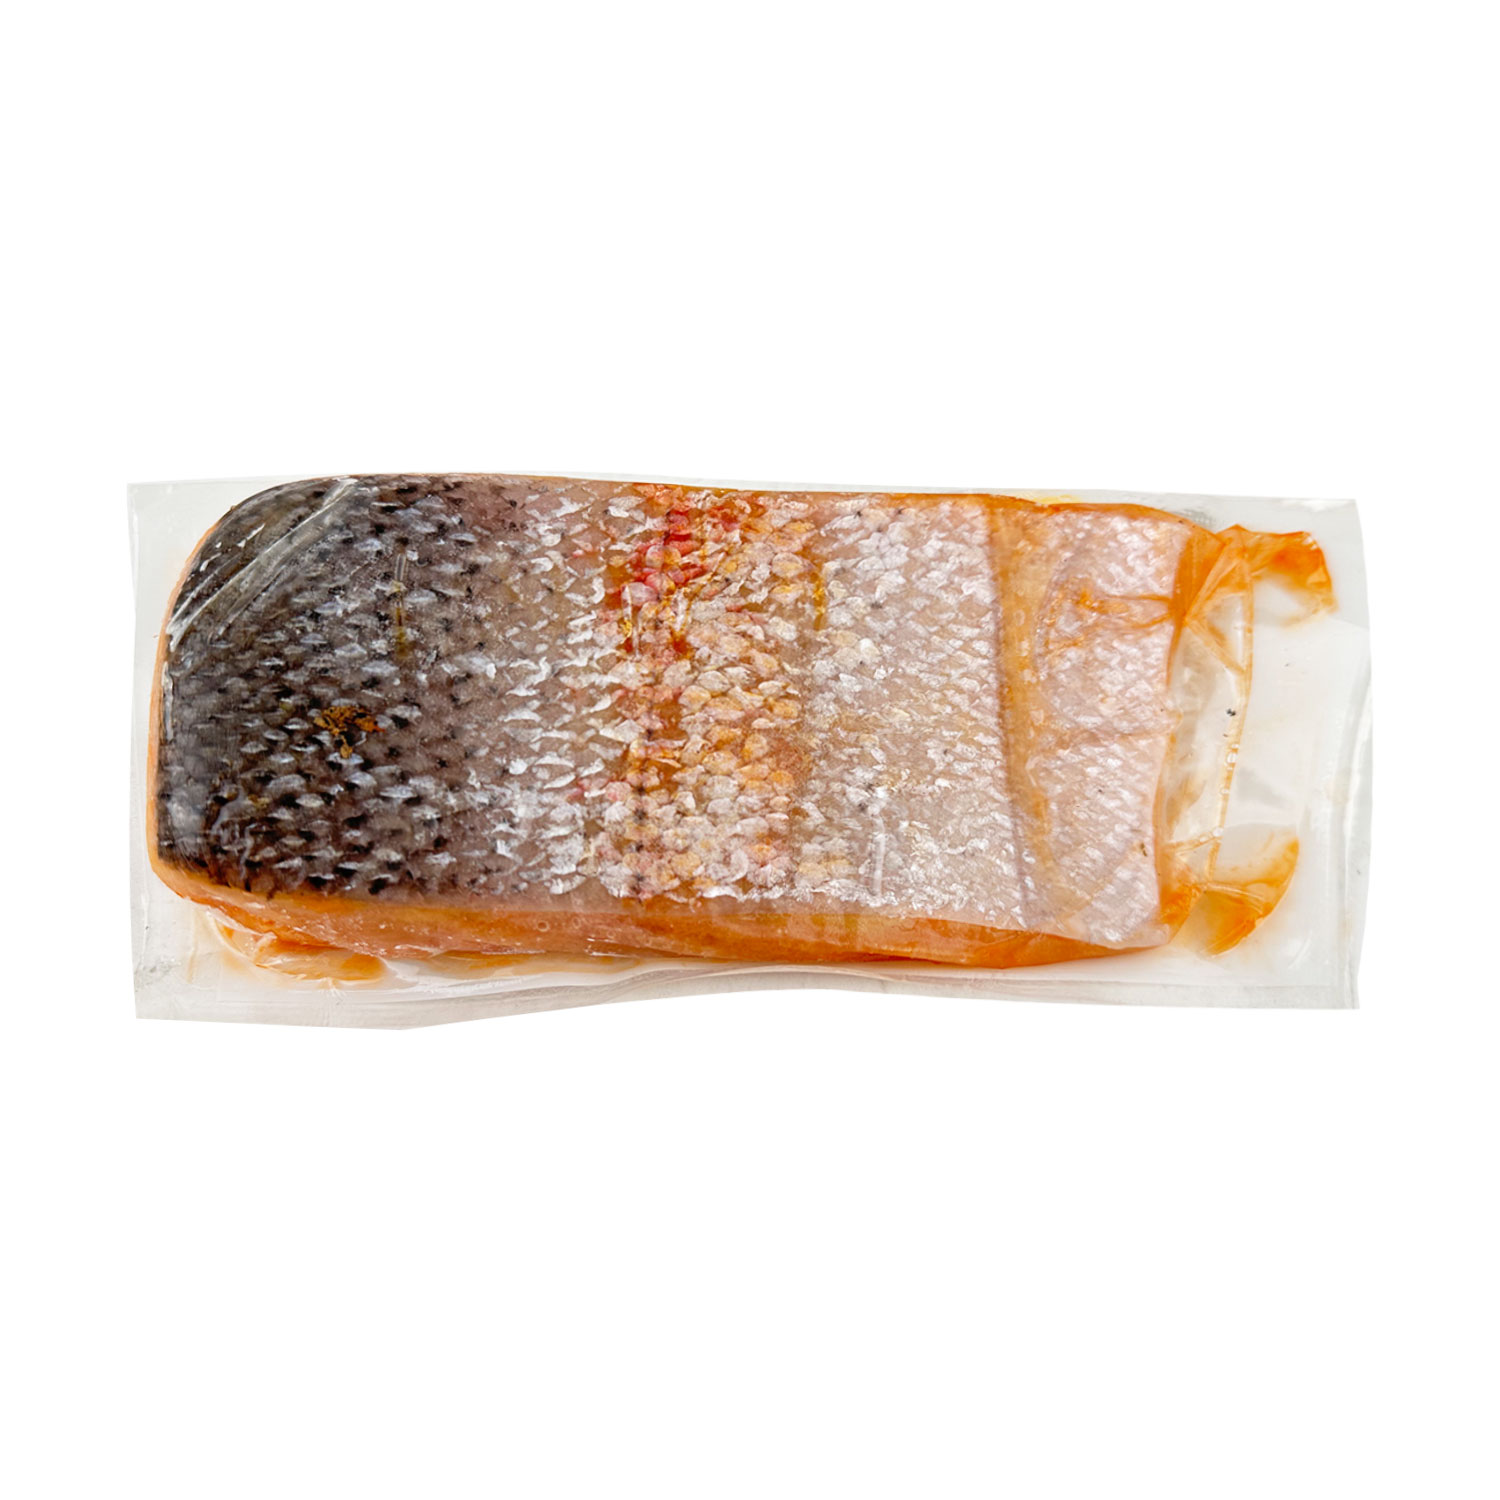 Frozen Ocean trout Skin On 180g （+/-15g）-eBest-Cod/Salmon/Sashimi,Seafood